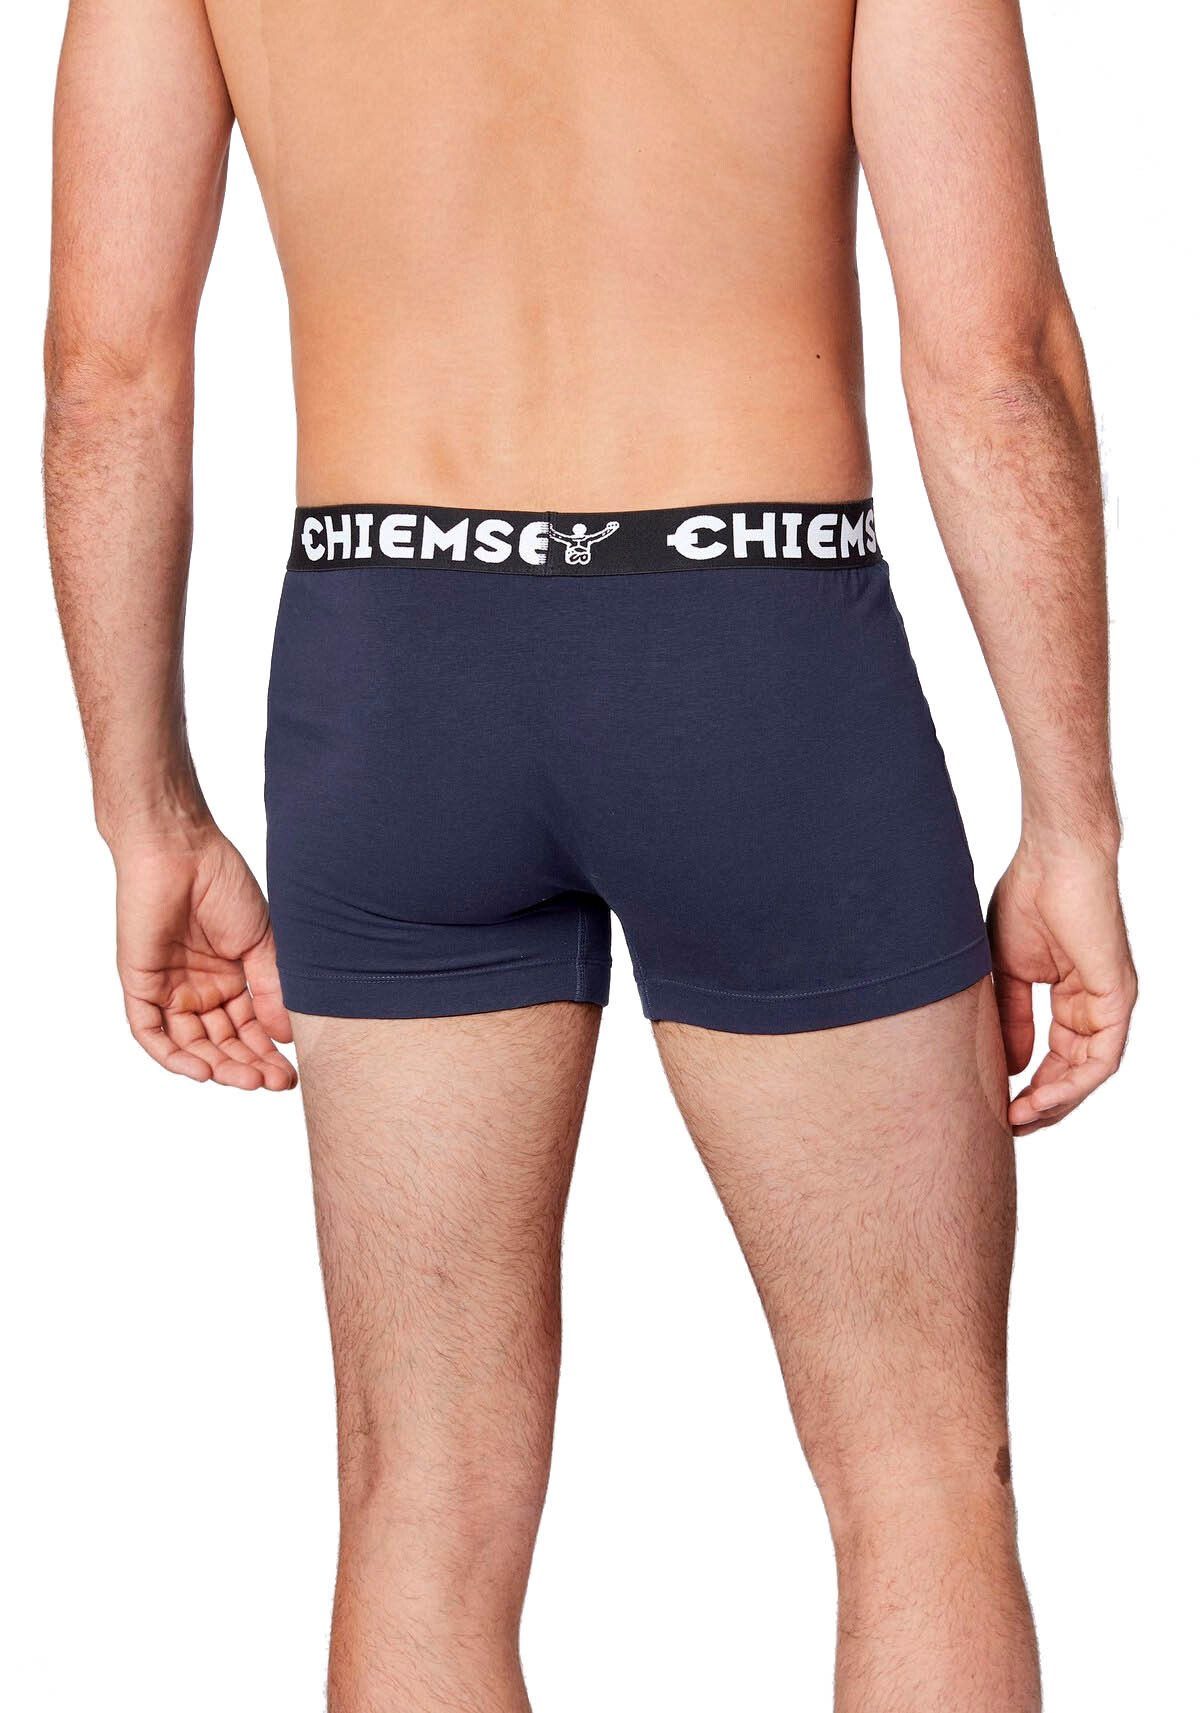 6er Boxer Herren Boxershorts, Dunkelblau Logobund Pack Chiemsee - Shorts,